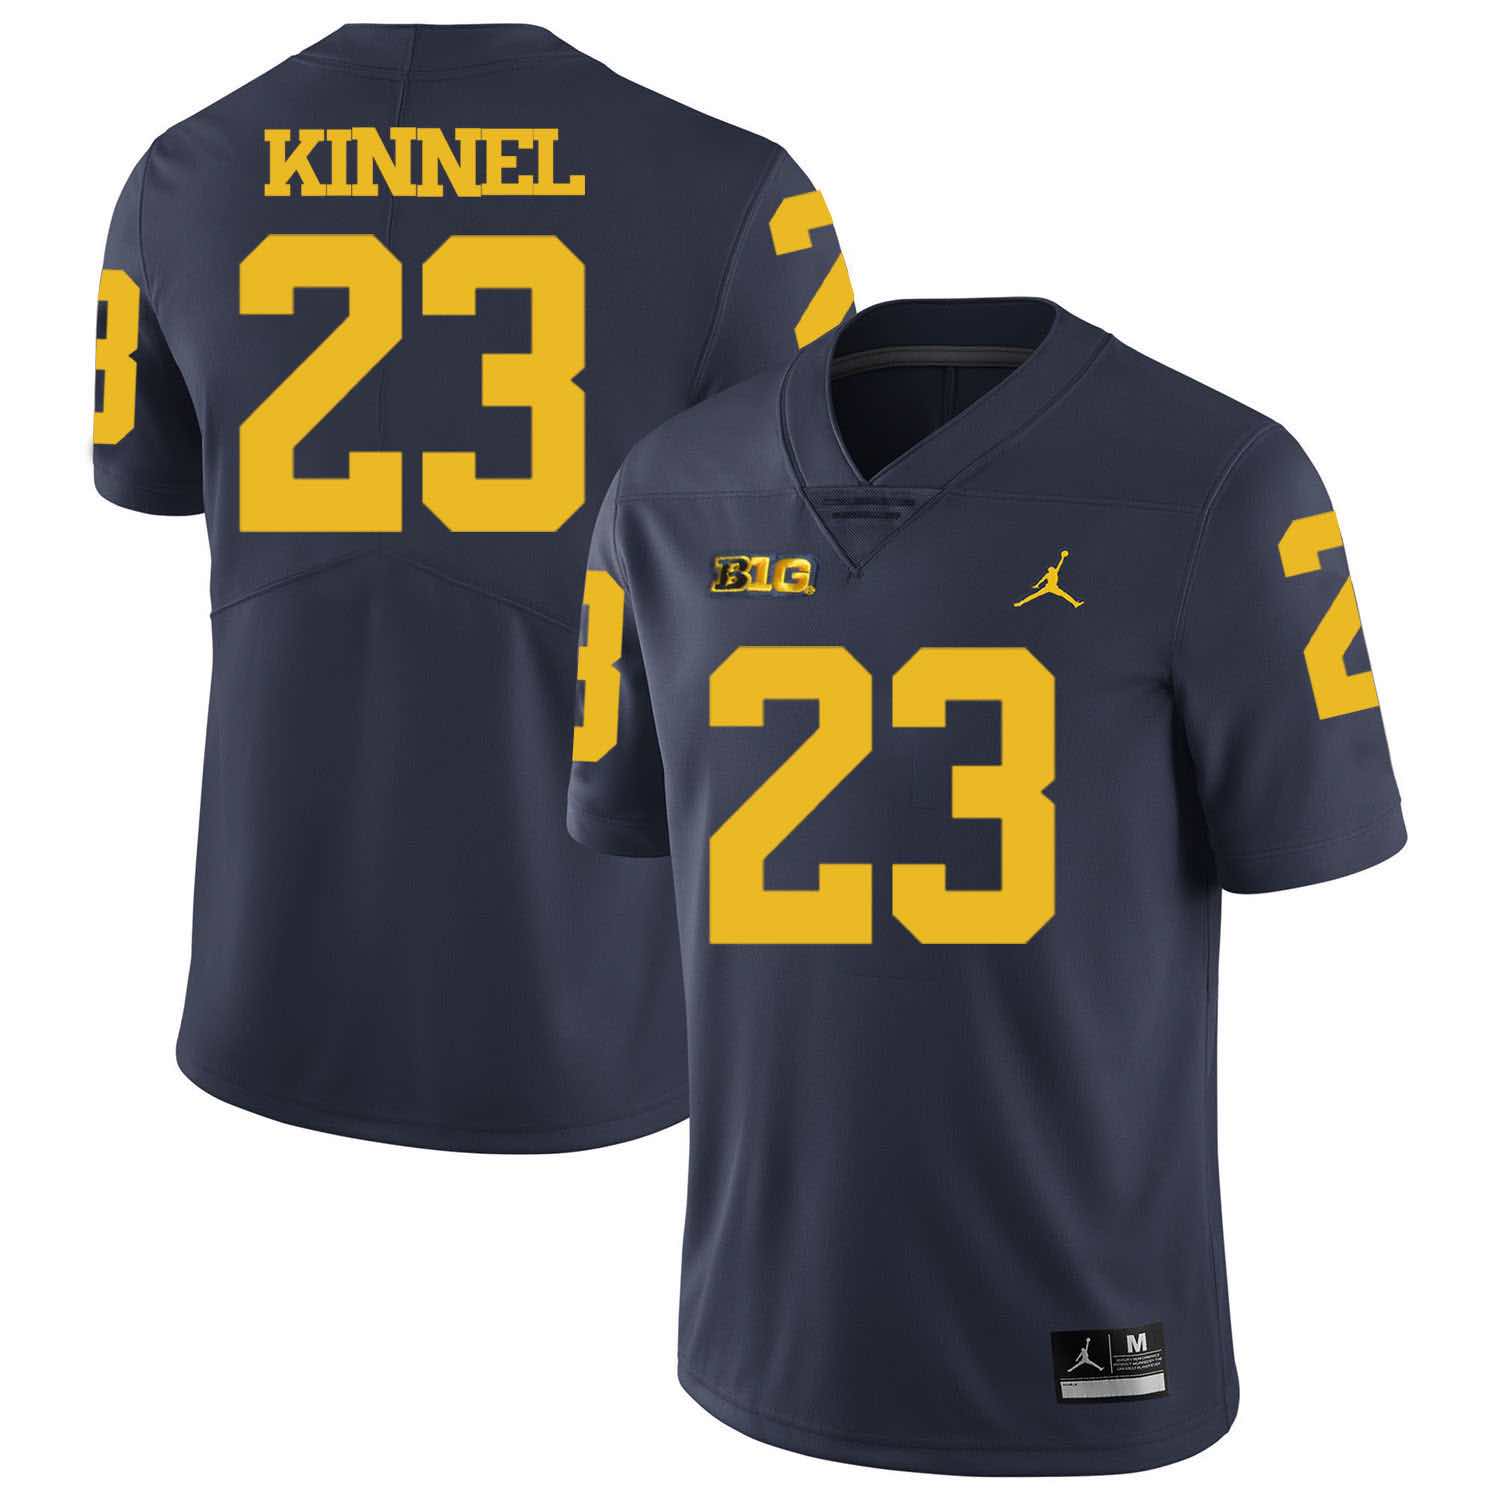 NCAA Michigan Wolverines #23 Kinnel D.Blue Football Jersey